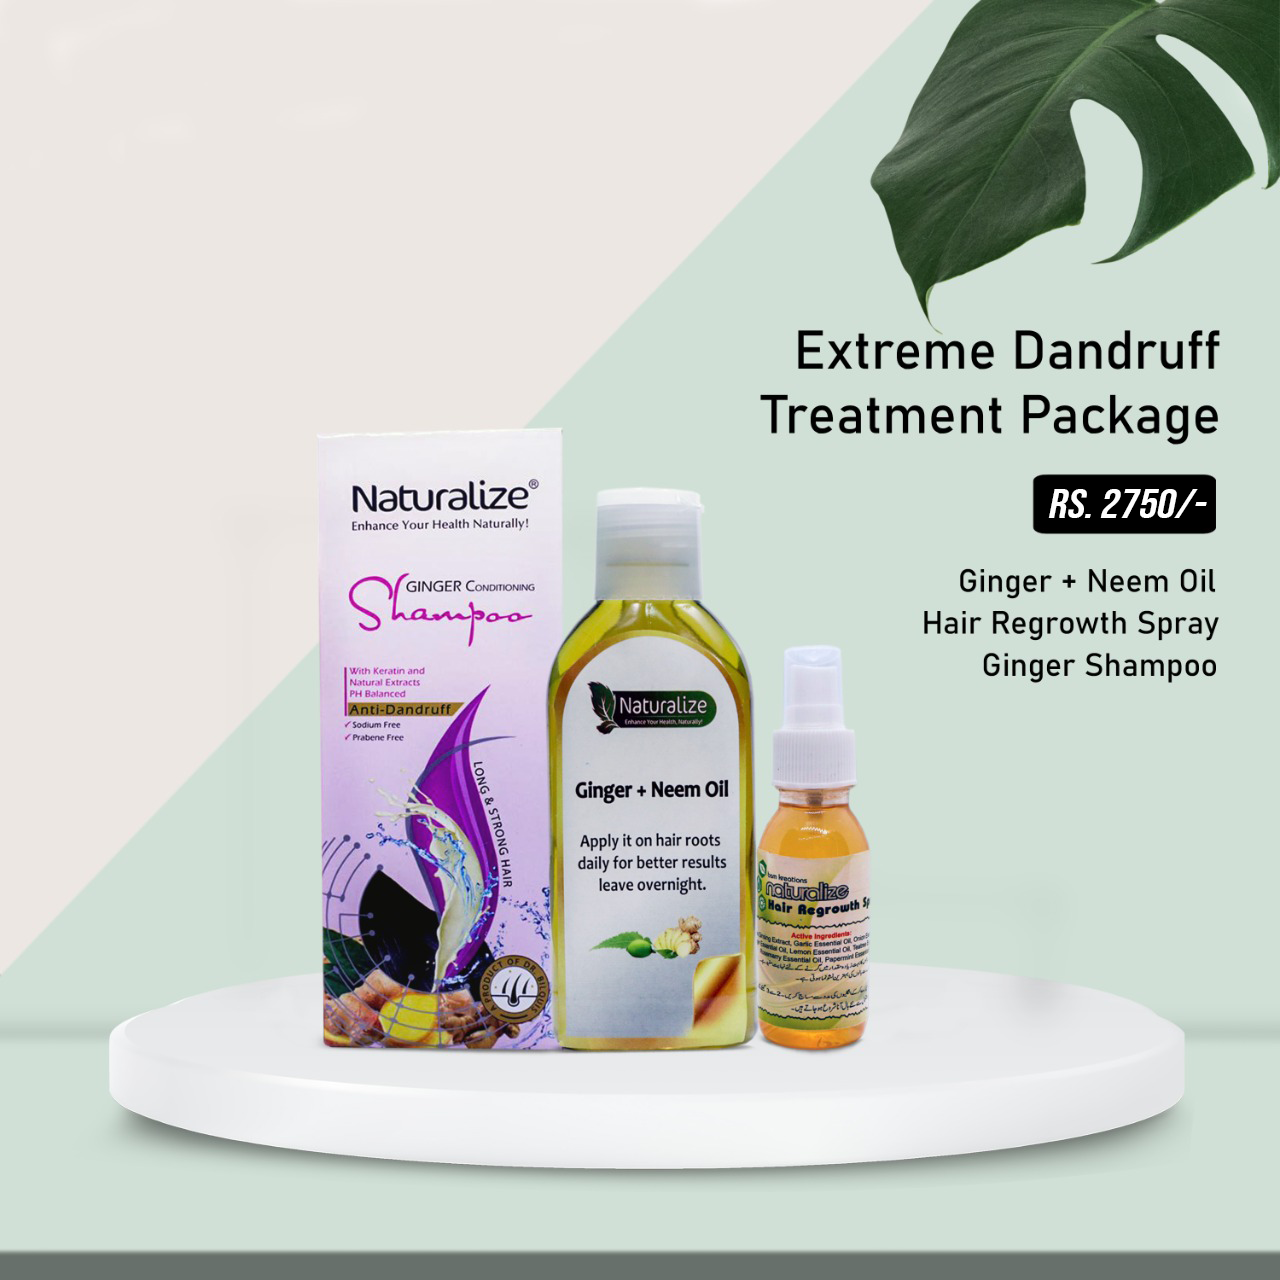 Anti Dandruff & Itching Dandruff Treatment Shampoo Scalp Treatment 100ml. |  eBay